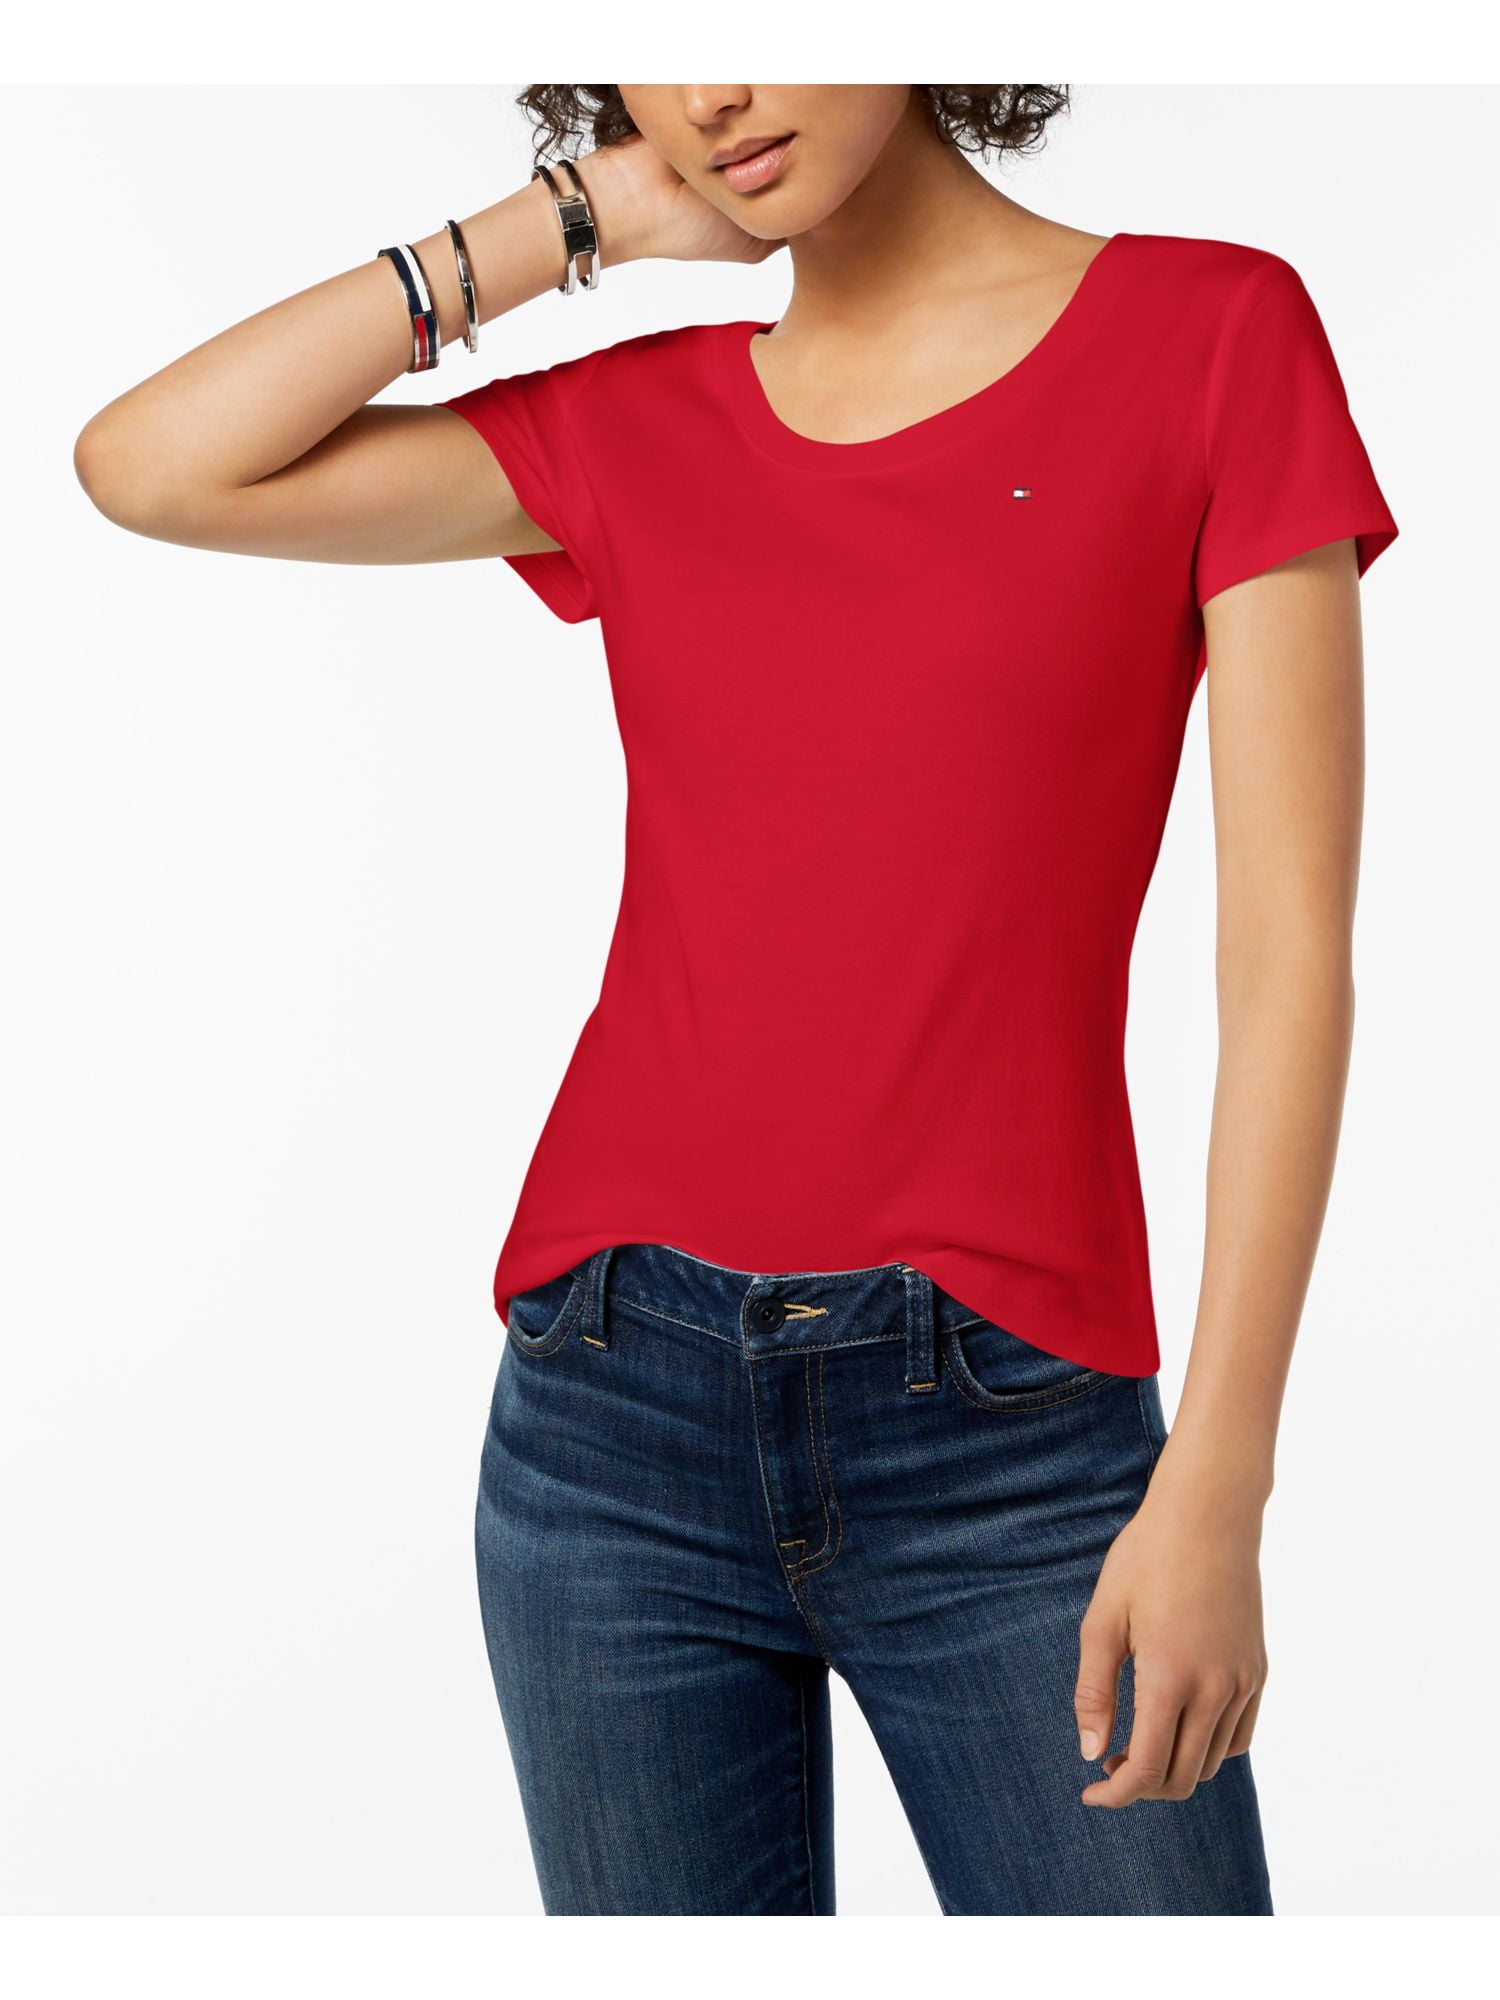 Tommy Hilfiger Womens T-Shirt, Red, Large Logo Basic